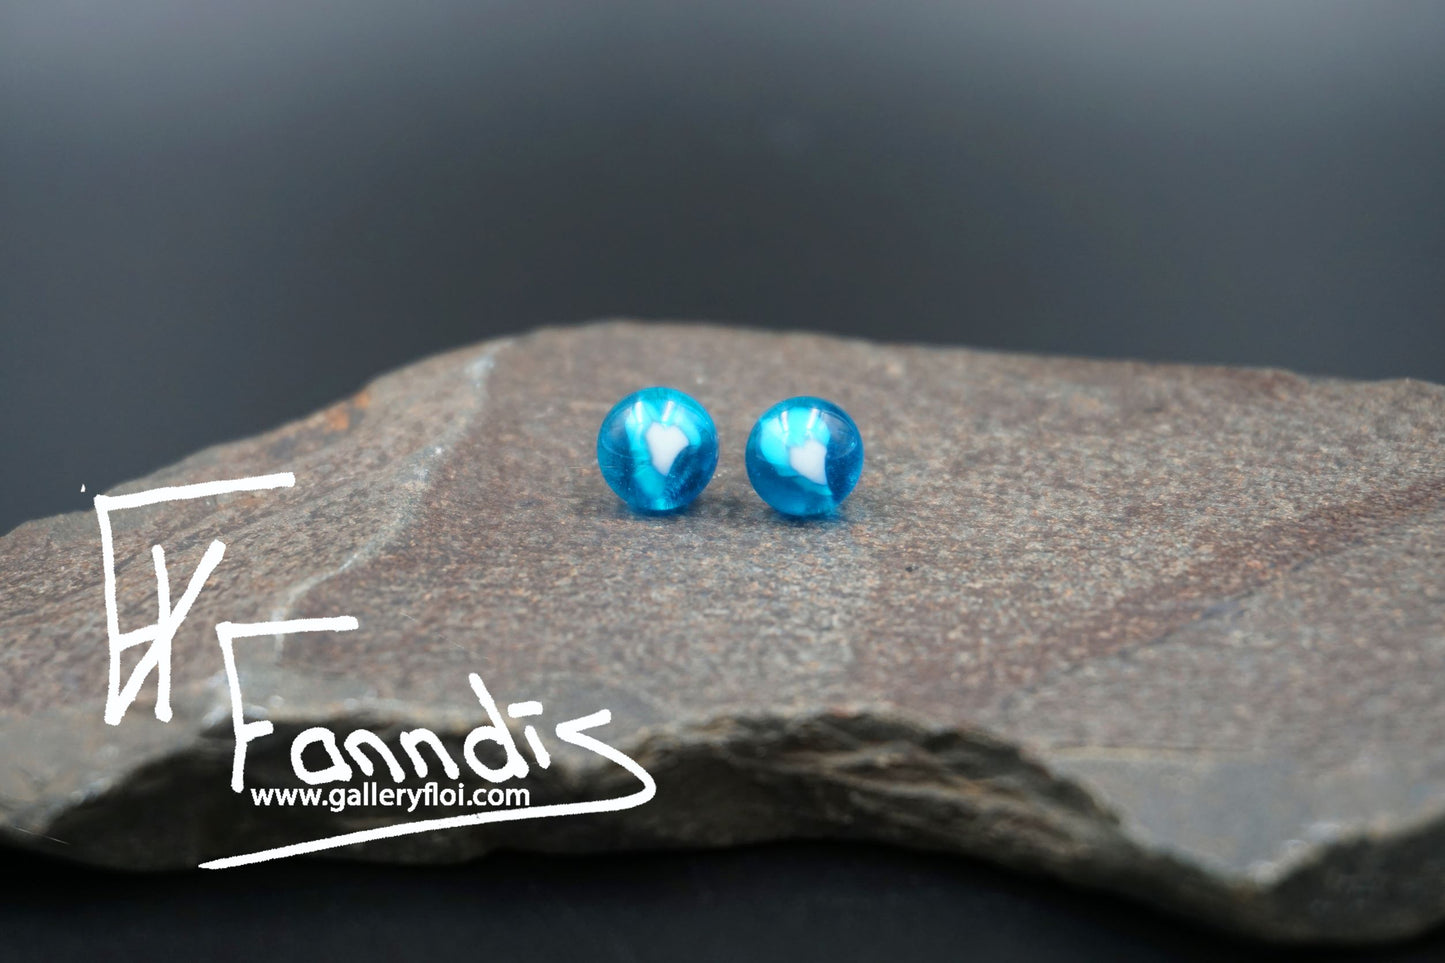 Einstök pinna eyrnalokkar Hjarta Dökk Blágrænn / Unique stud earrings Heart Dark Turquoise